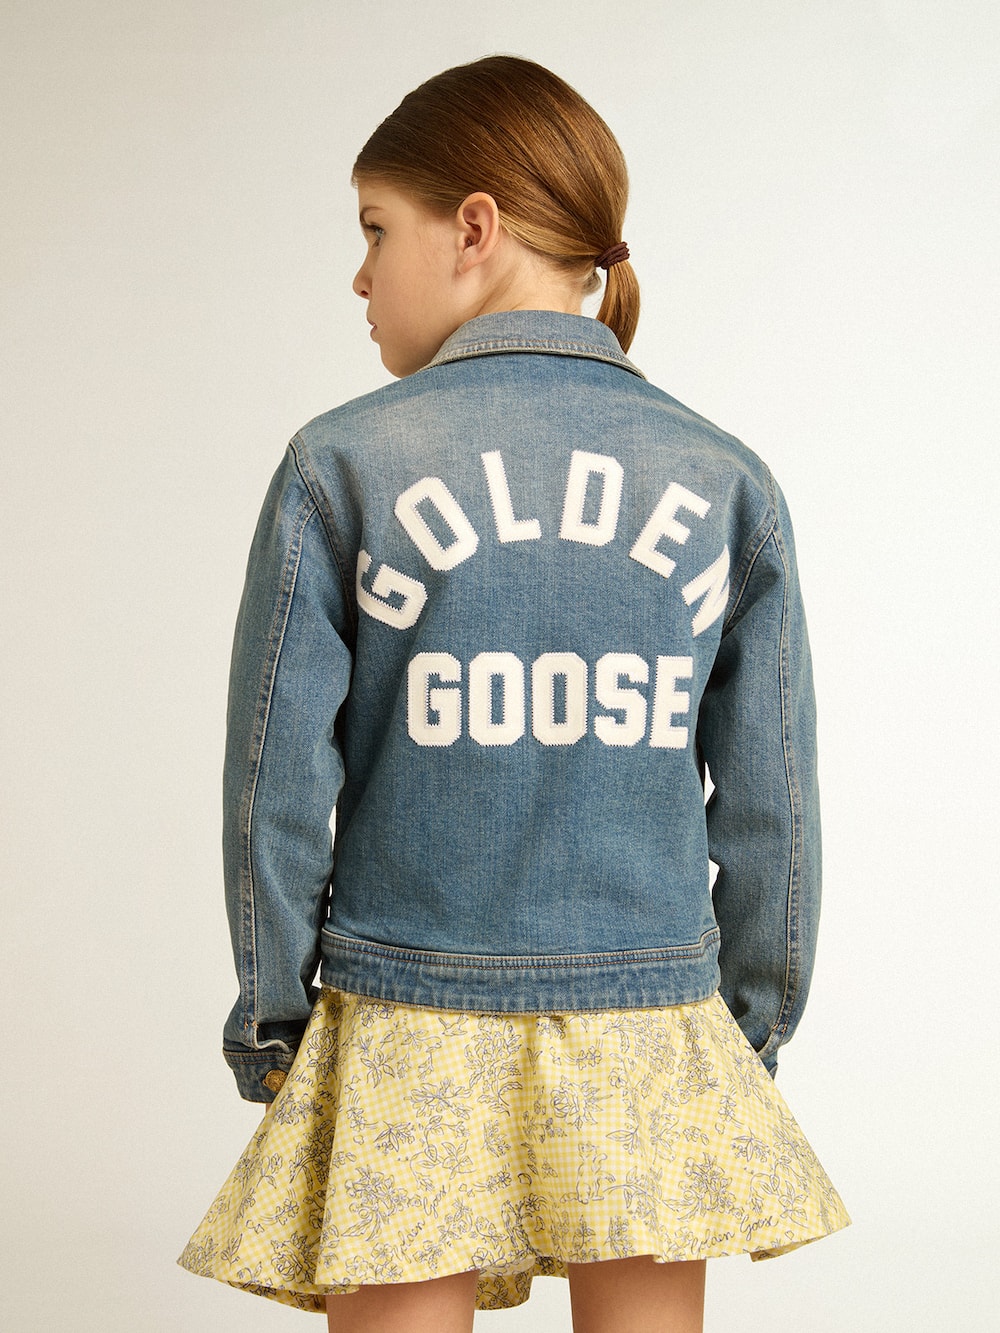 Golden Goose - Jaqueta jeans infantil masculina com lavagem média in 